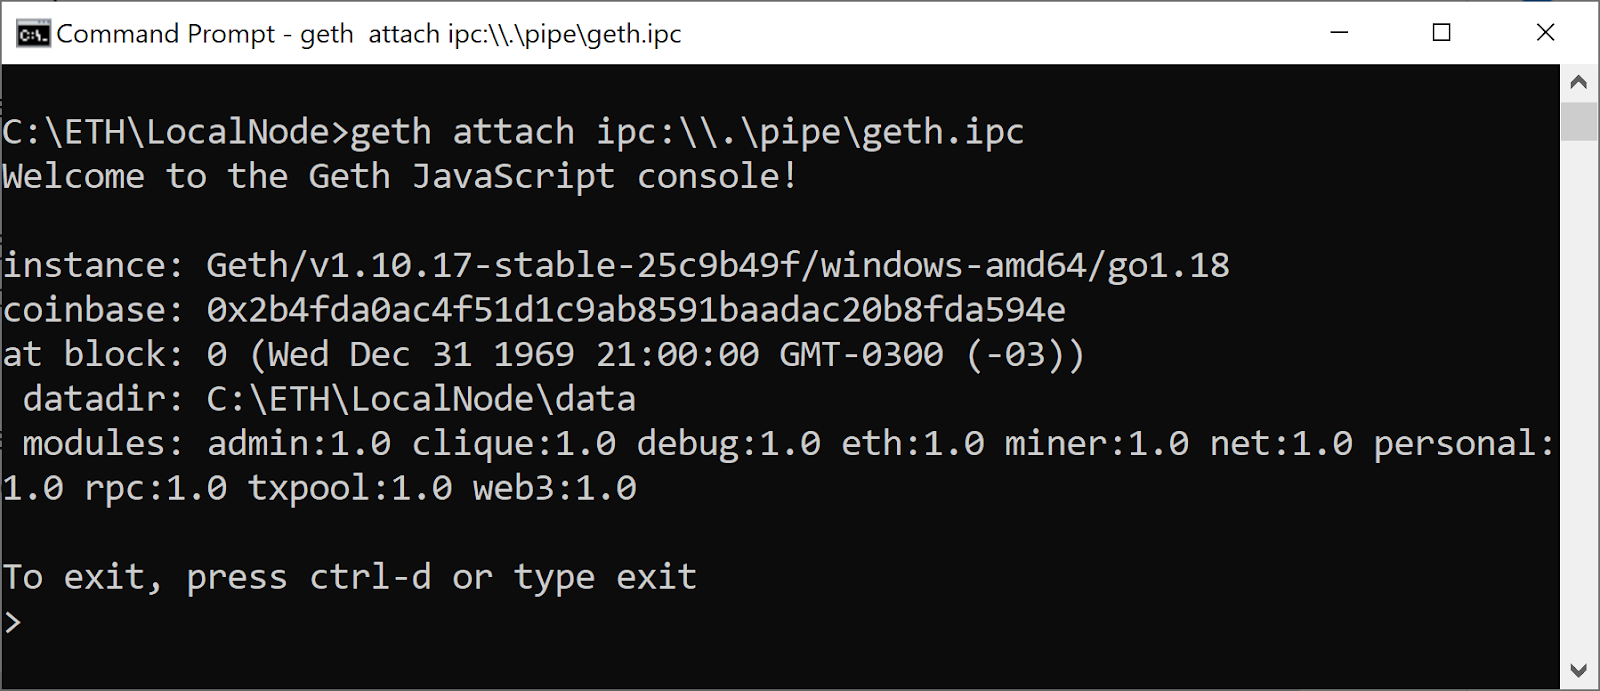 Screenshot of the output of geth attach ipc:\.pipegeth.ipc